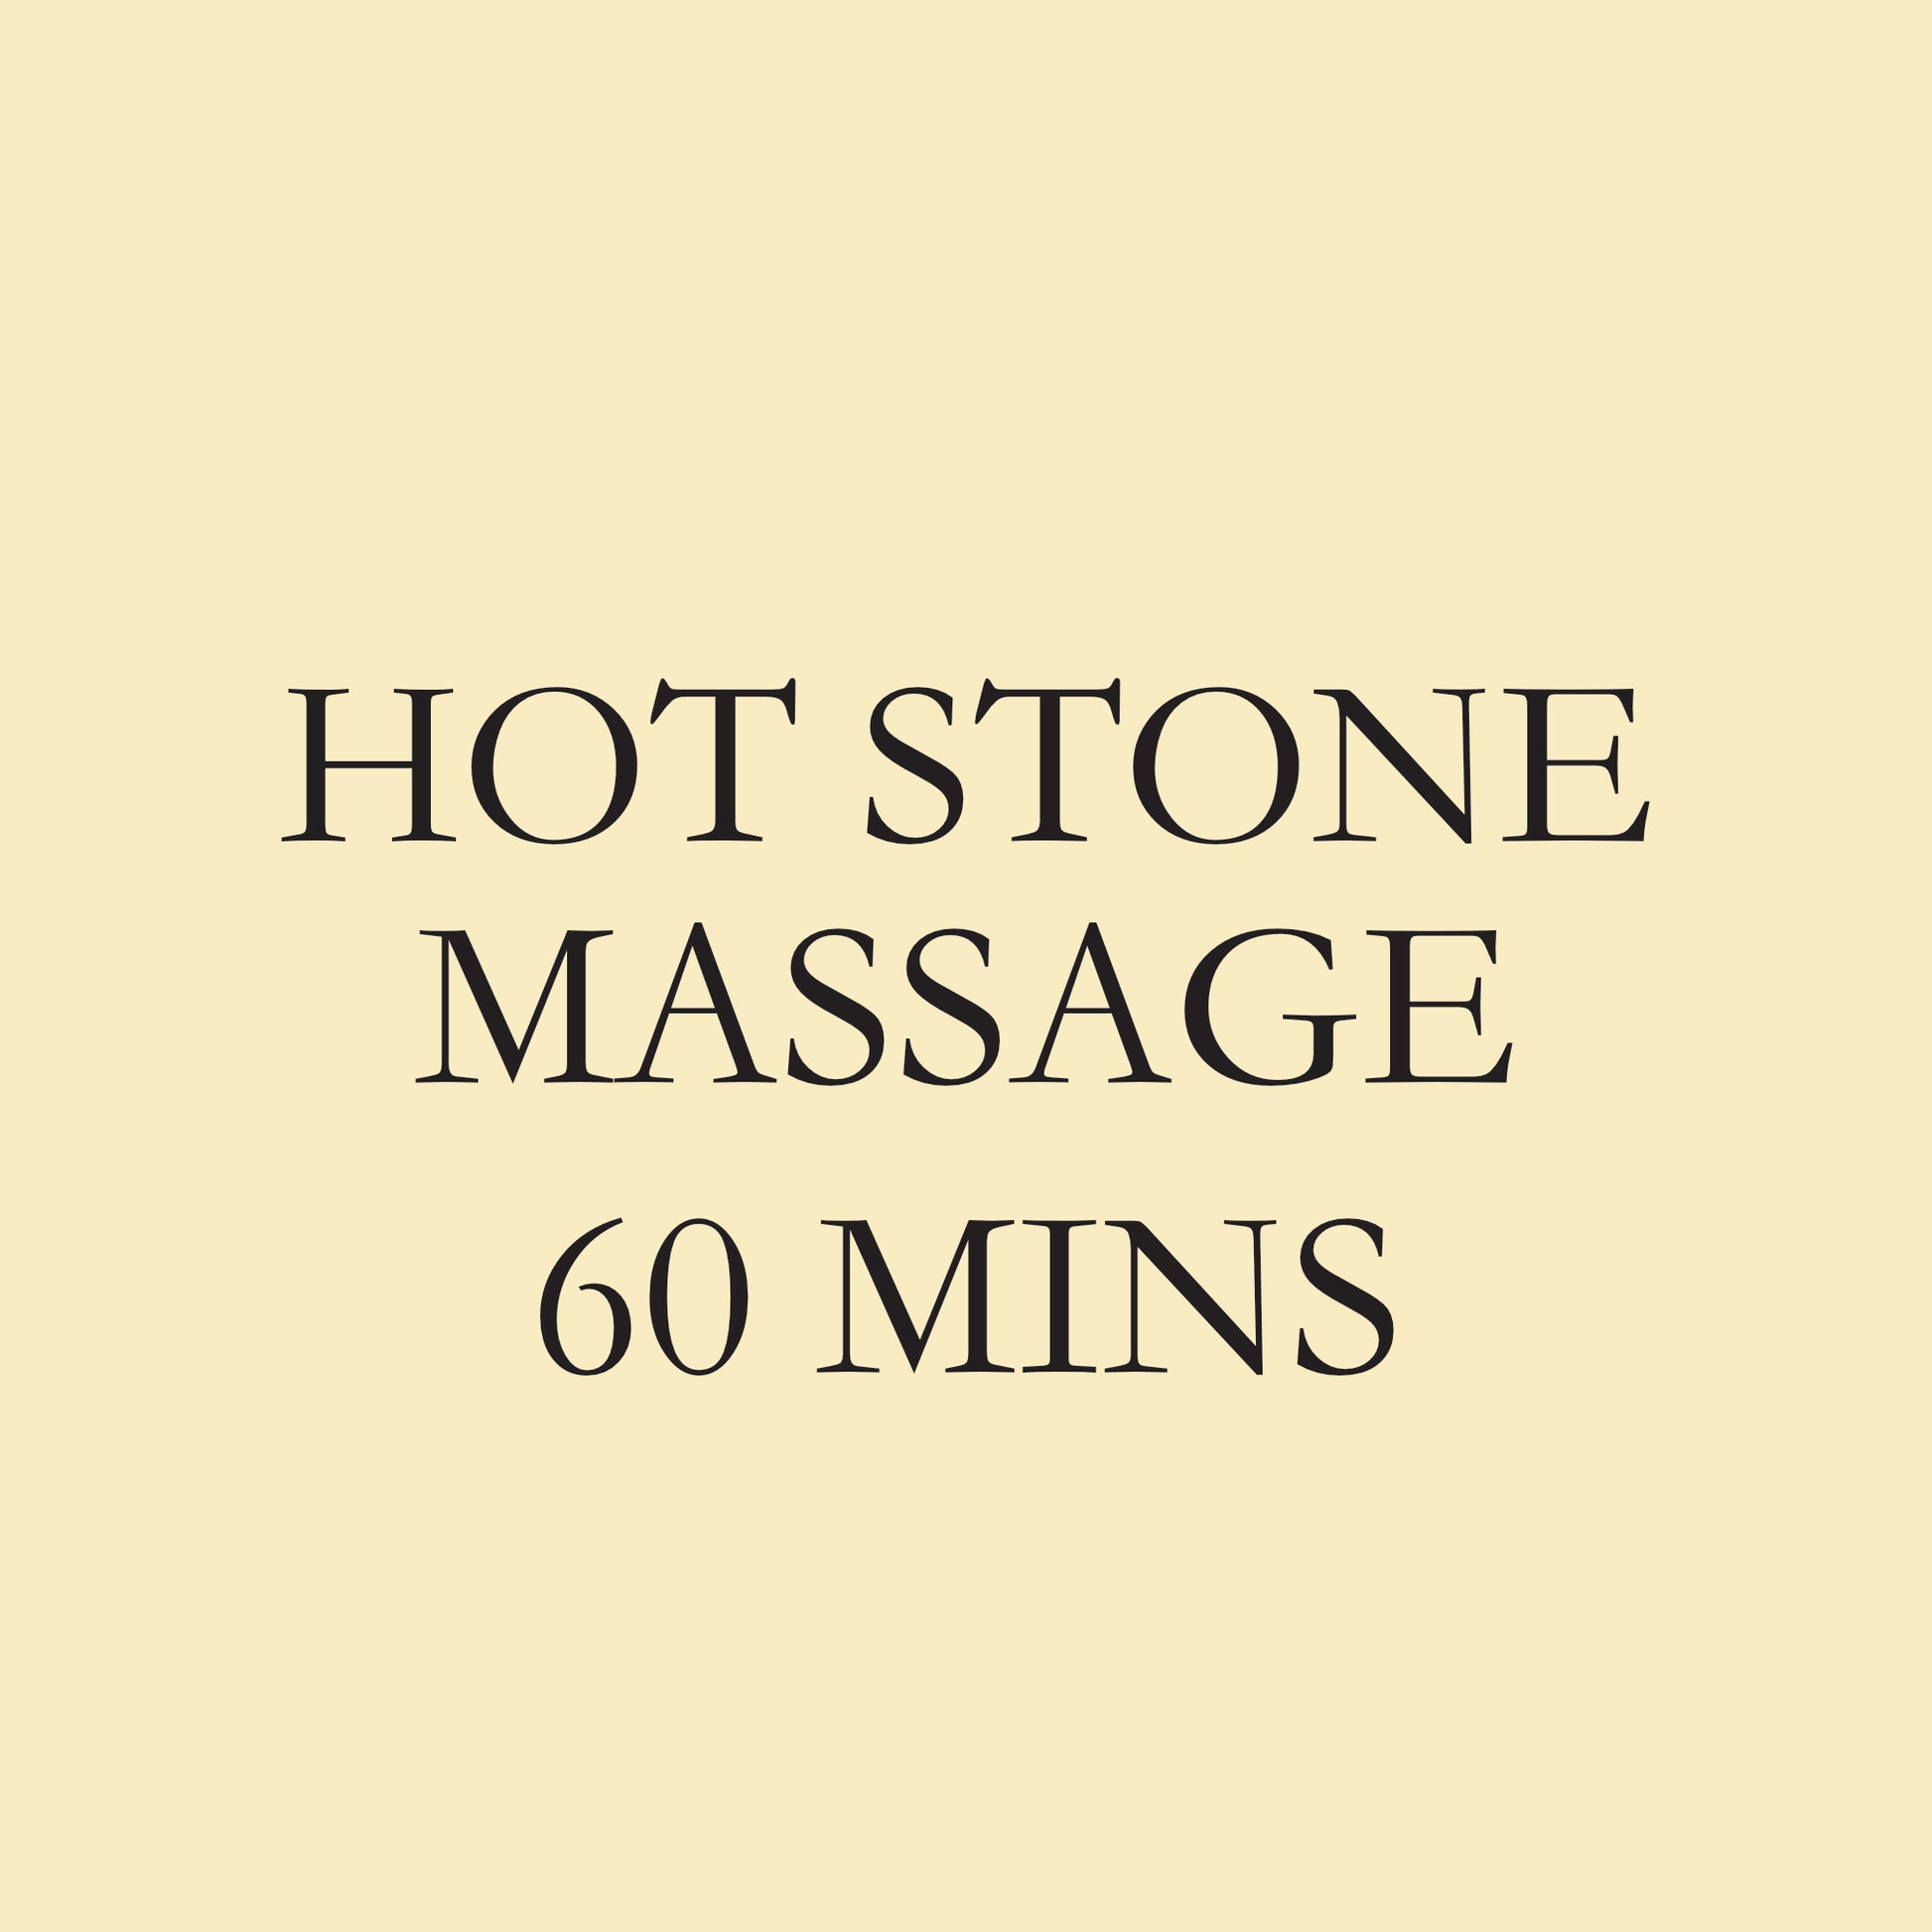 Hot Stones Massage Whispering Daisies